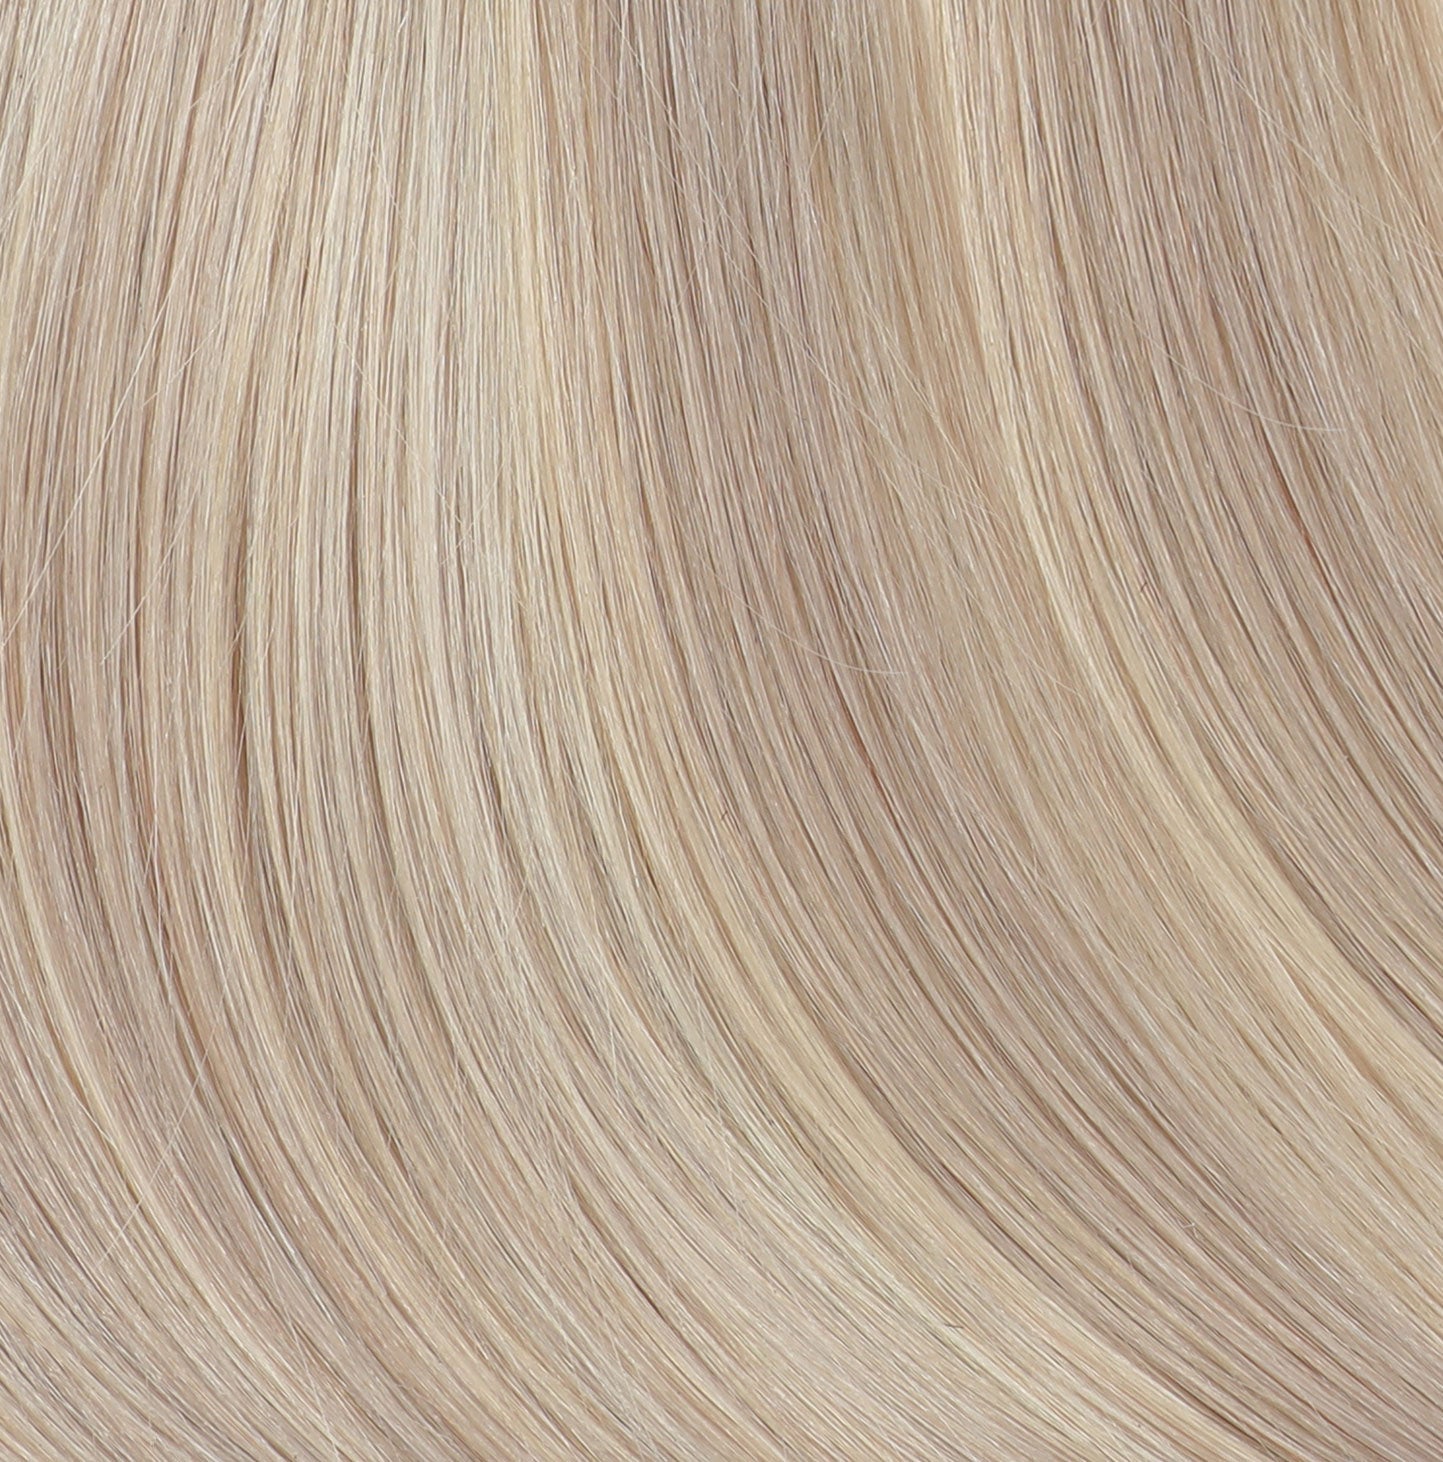 Genius Weft Hair Extensions   #17/1001 Ash Blonde Mix